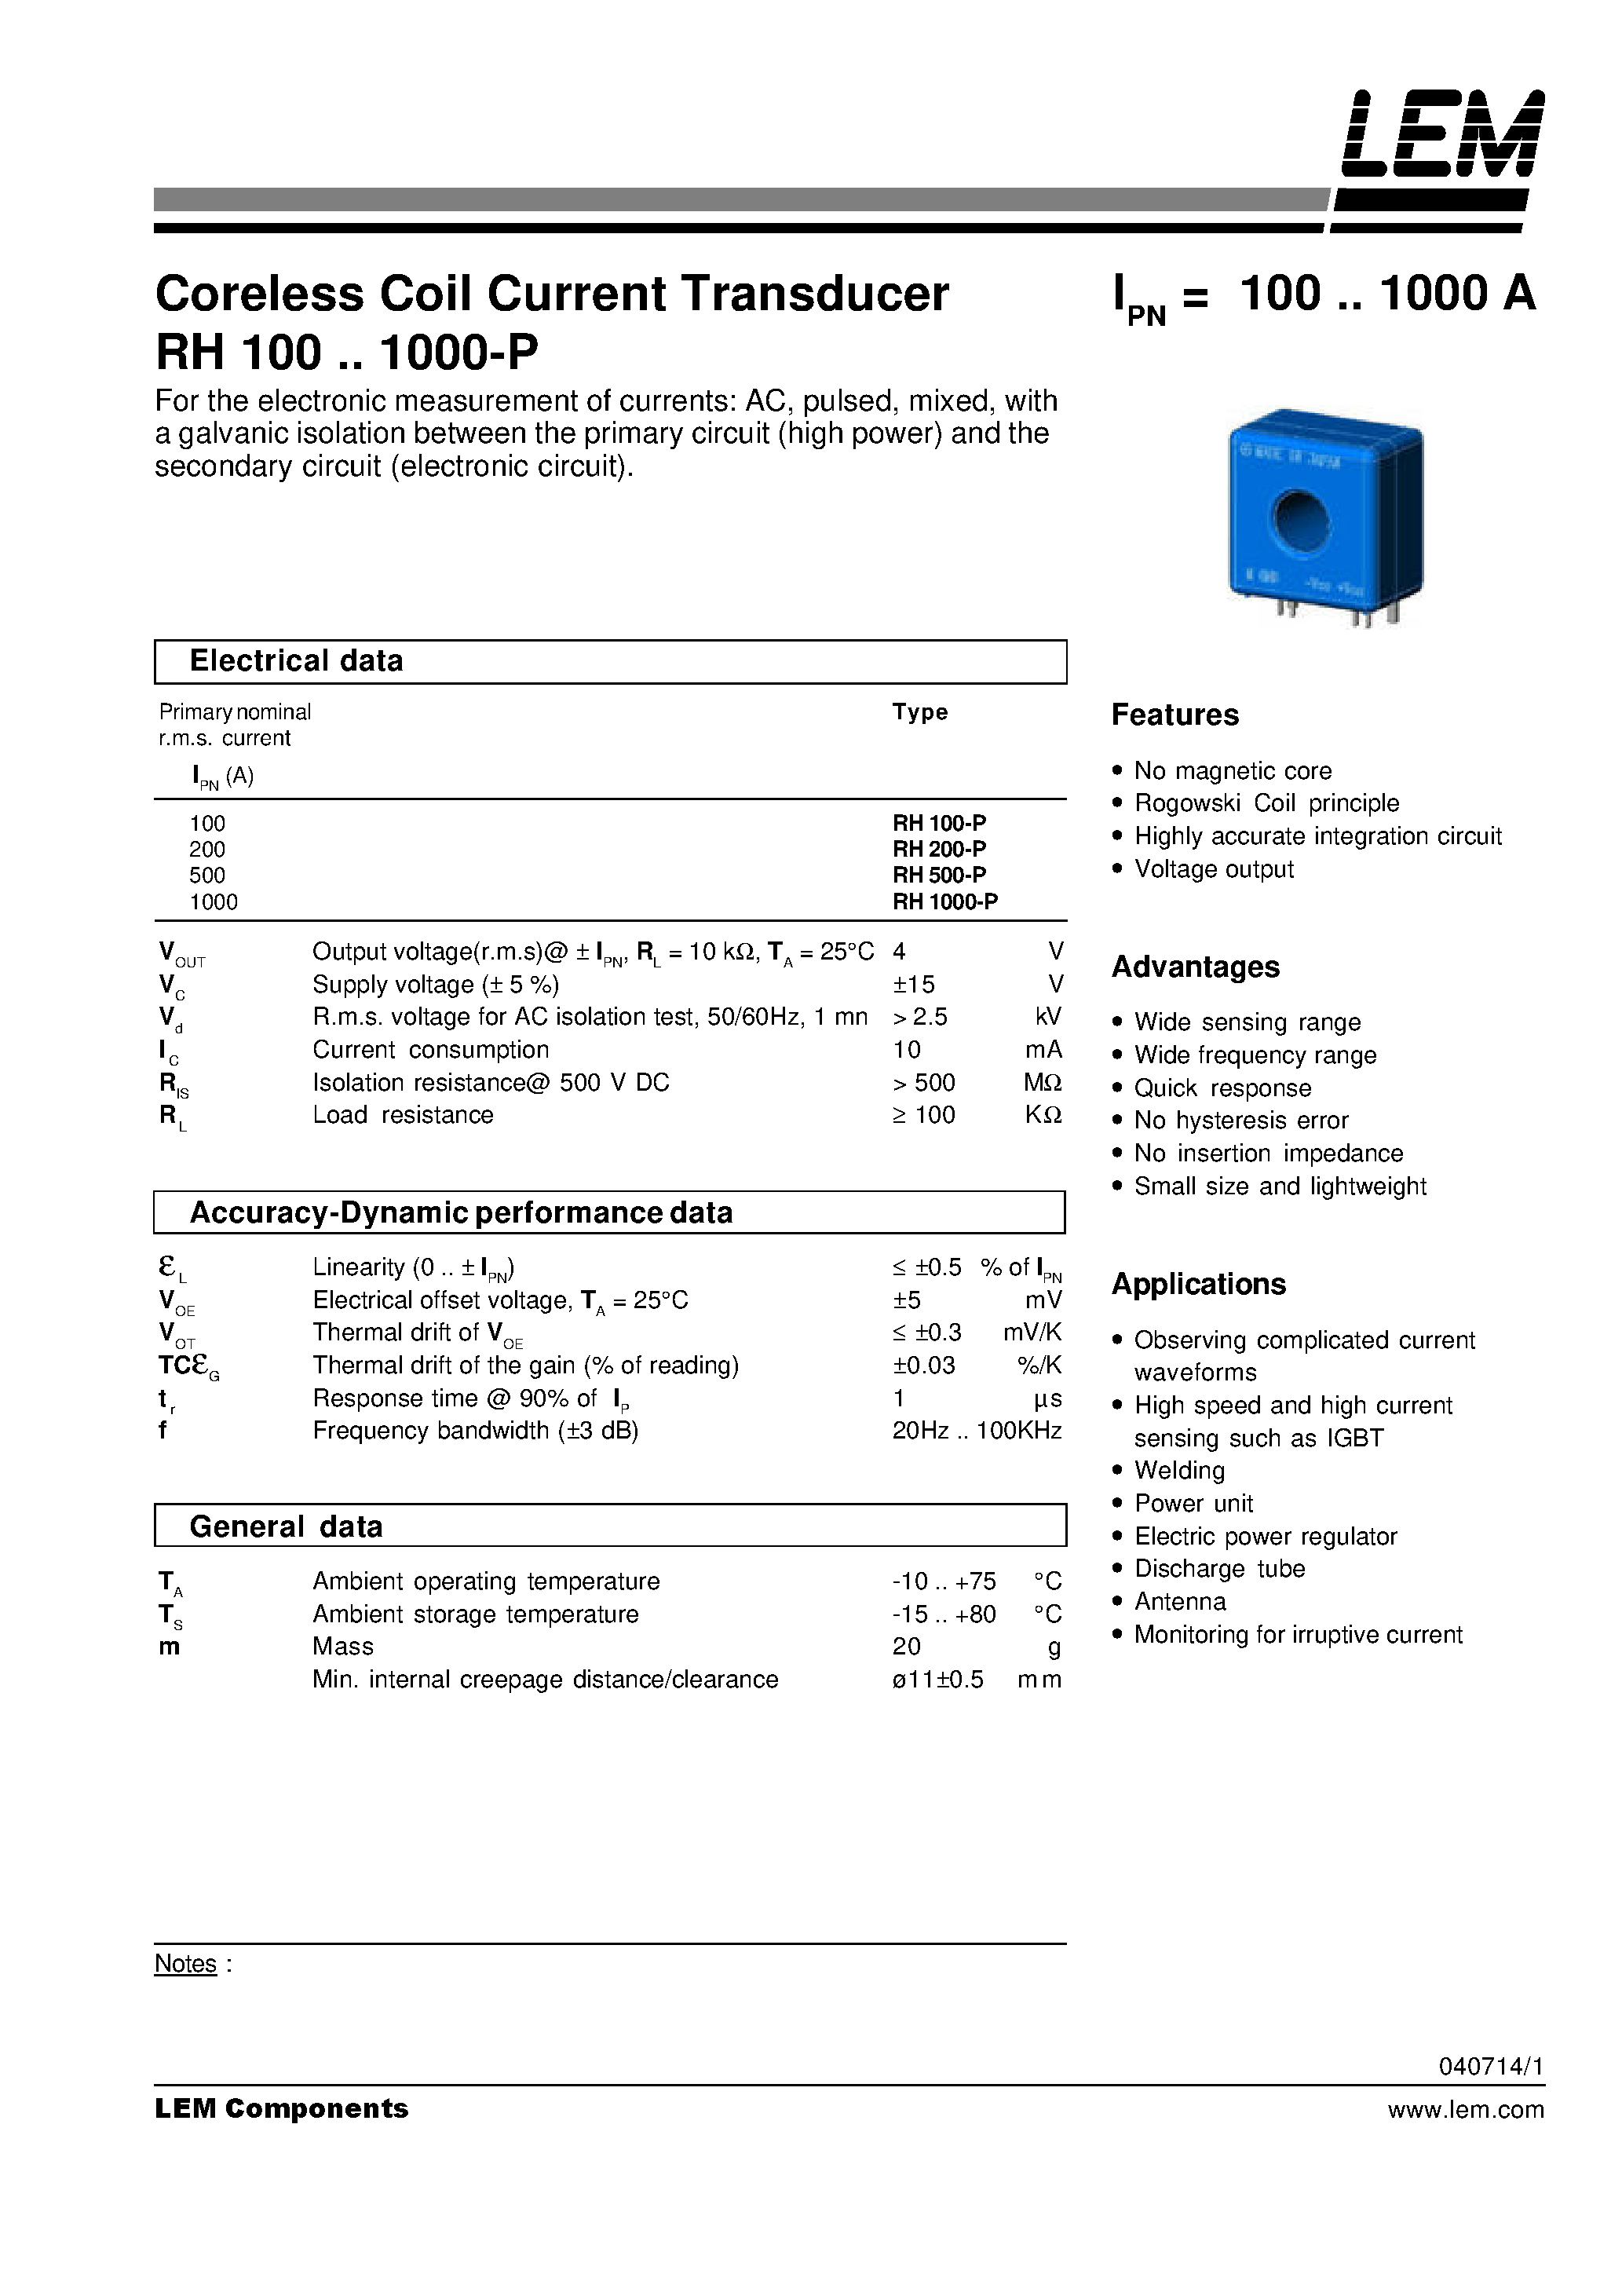 Datasheet RH1000-P - Coreless Coil Current Transducer RH 100~1000-P page 1